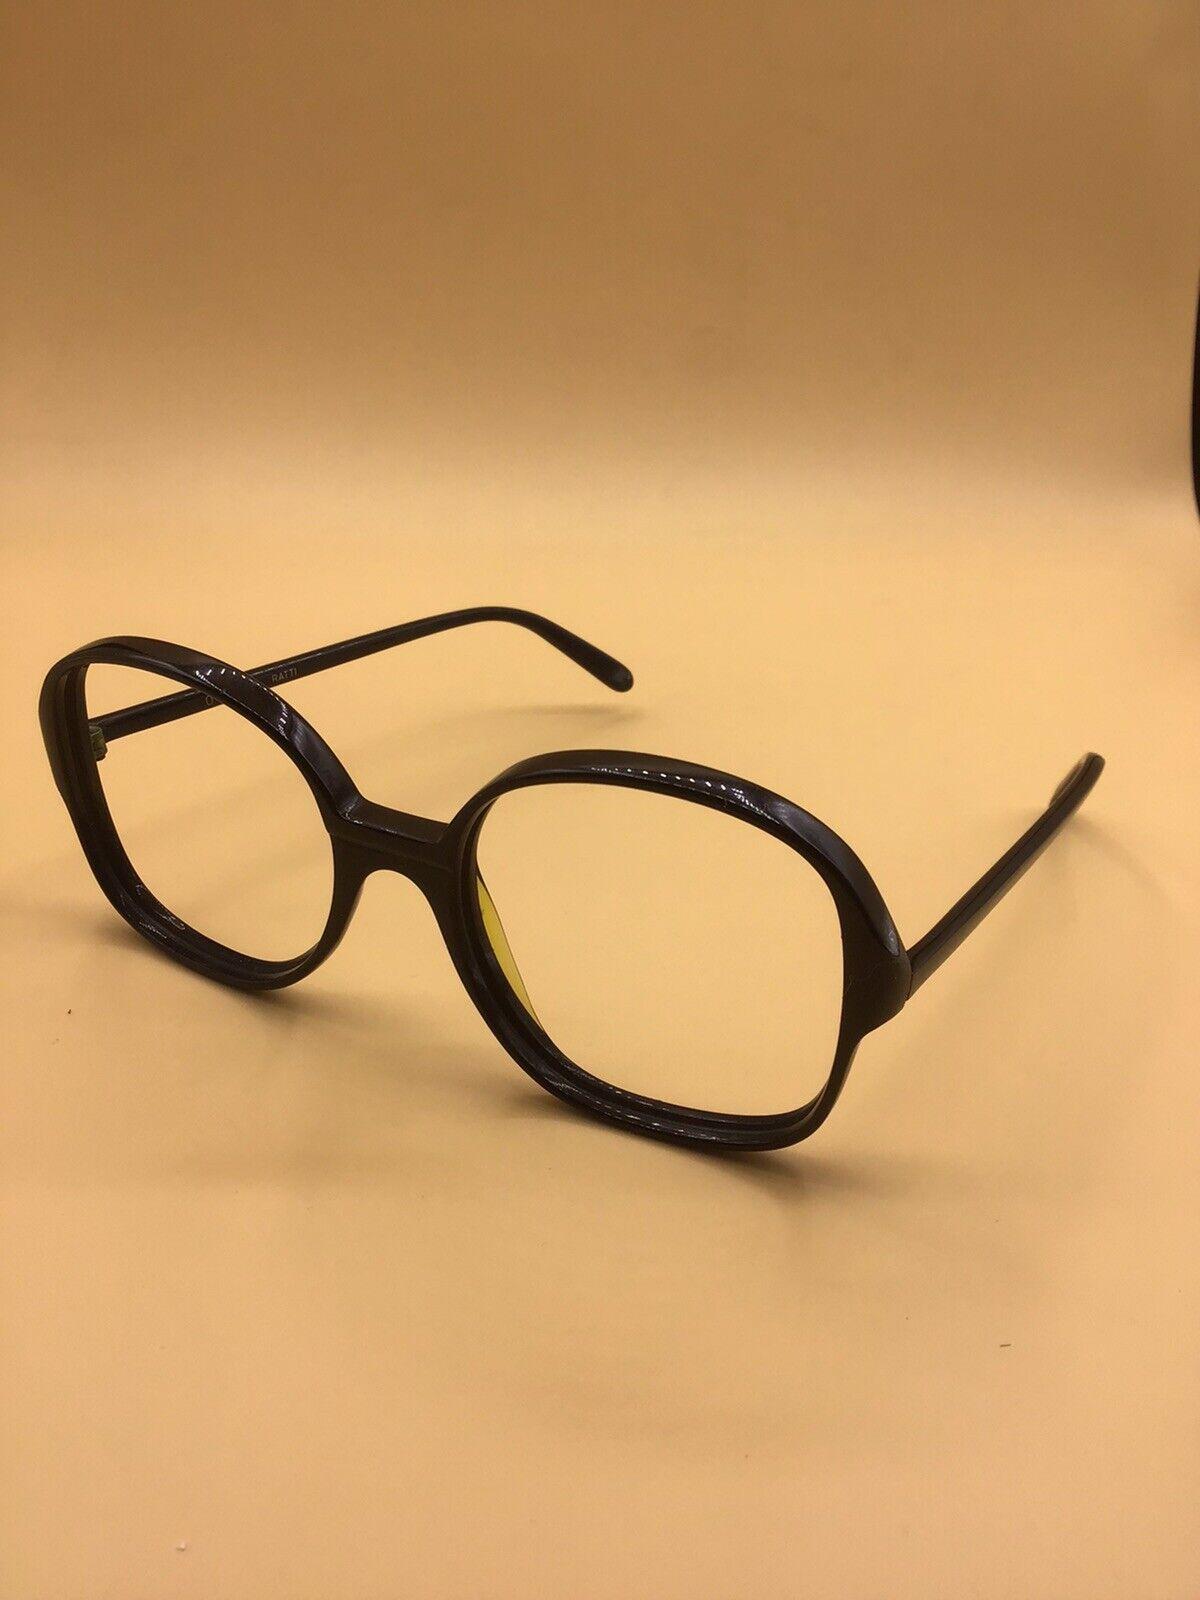 Persol Ratti modello 0759 occhiale vintage eyewear frame brillen lunettes